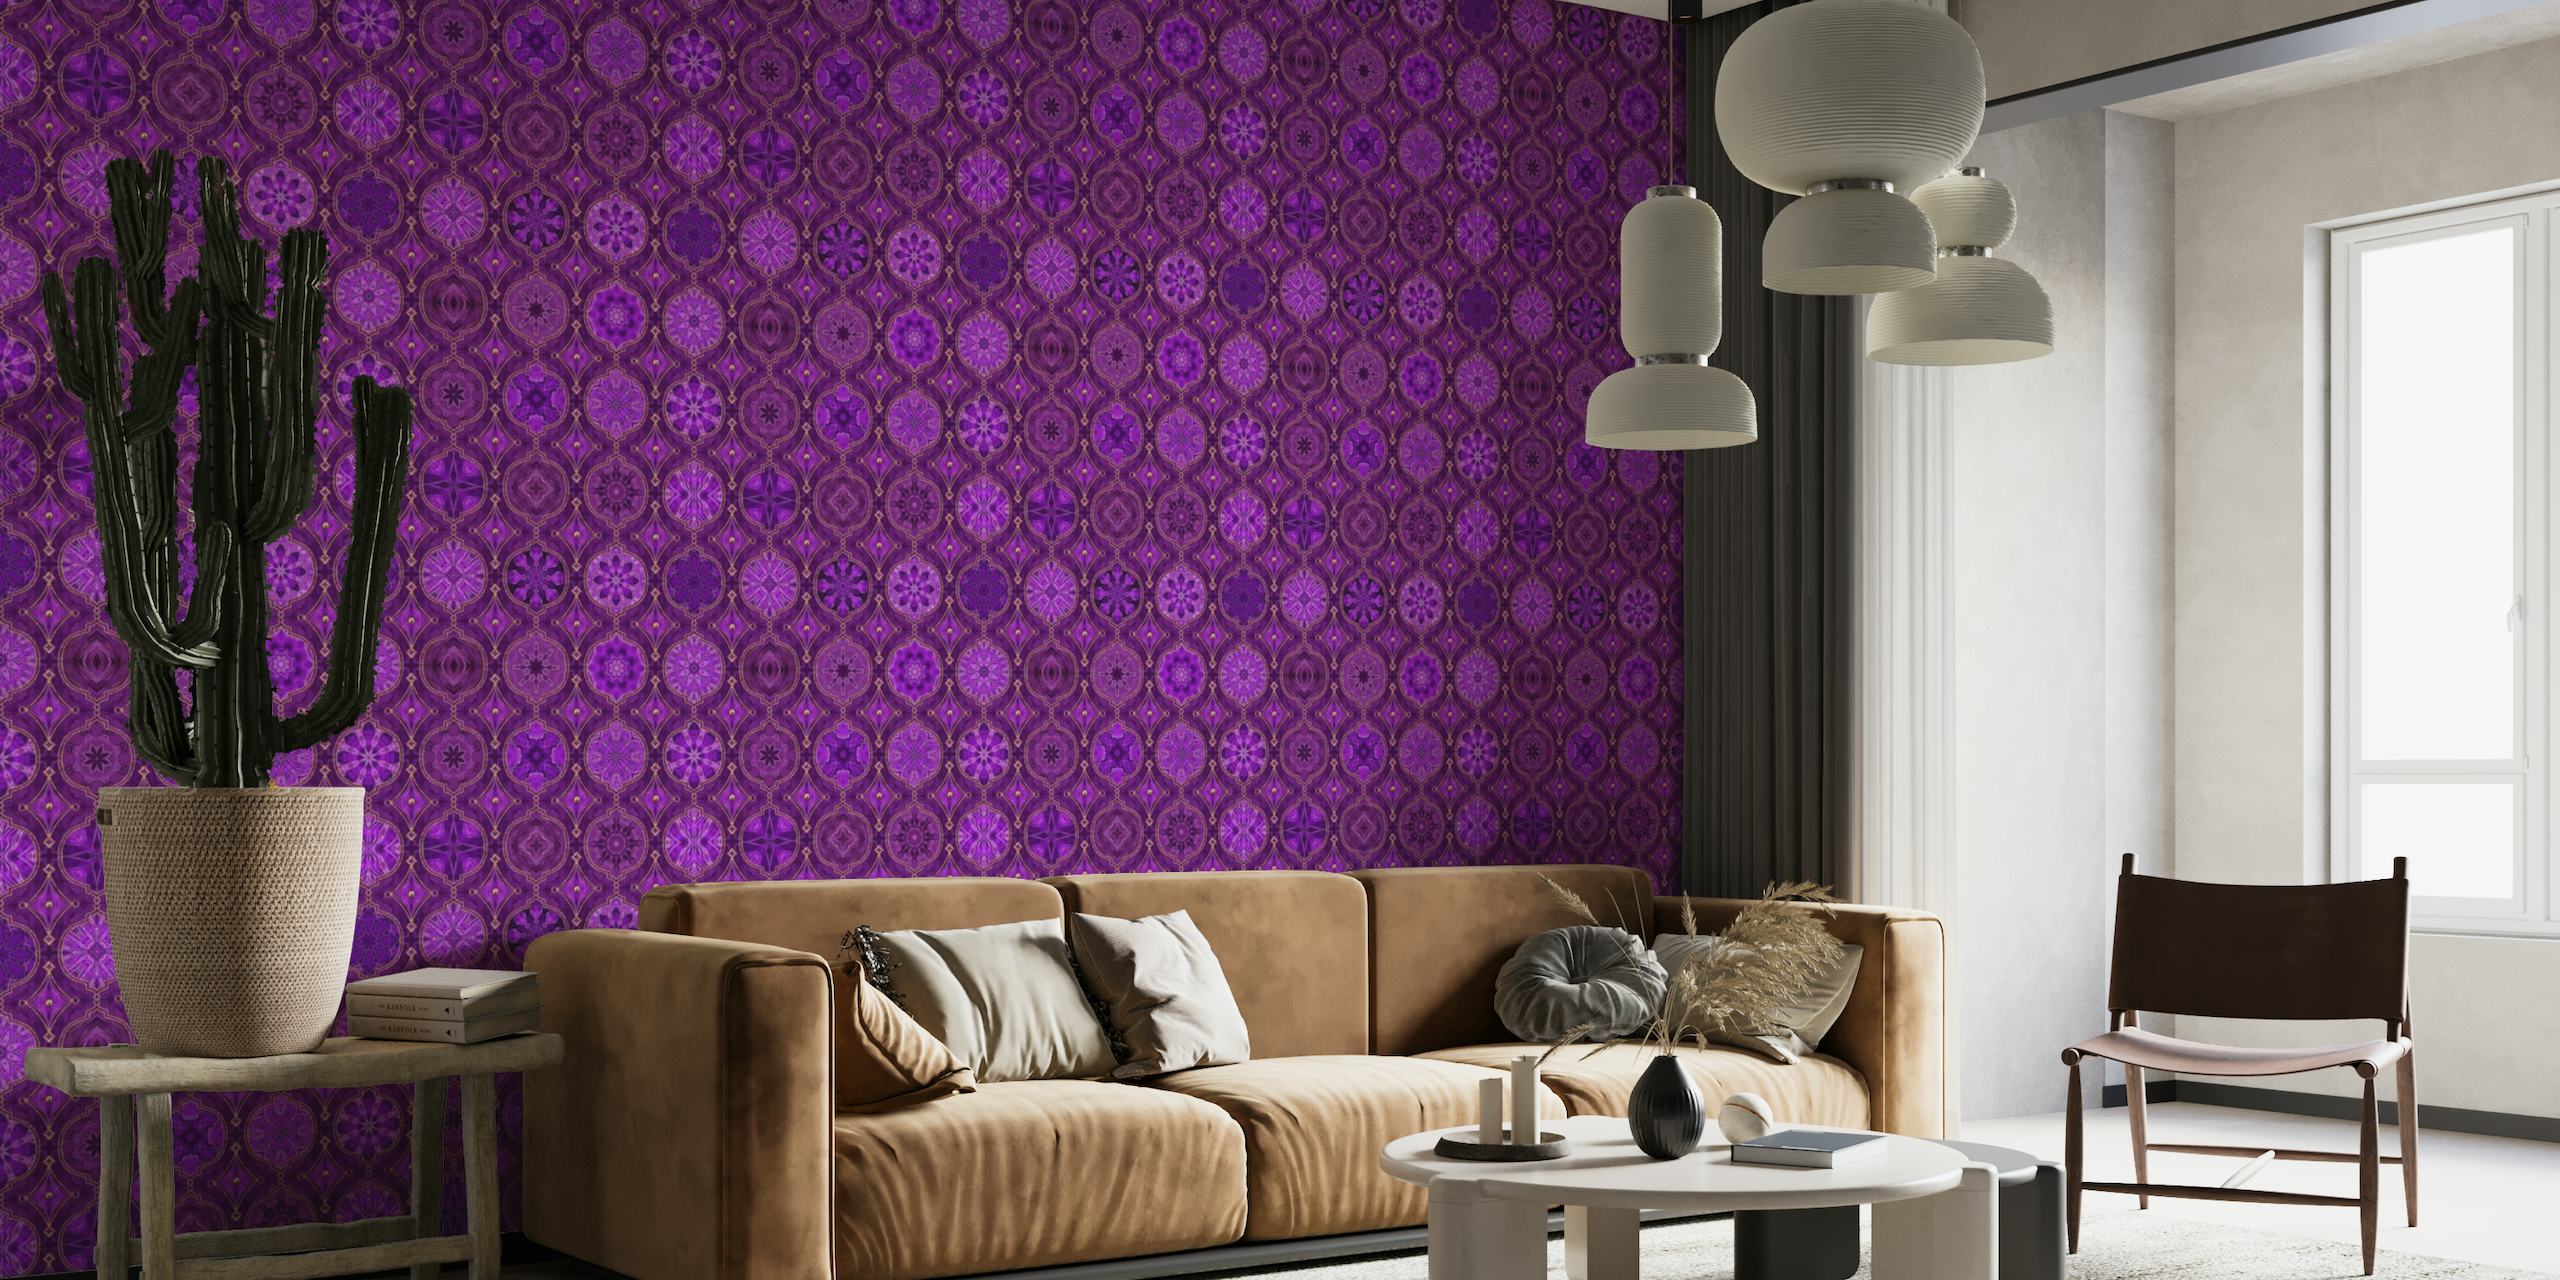 Treasures of Morocco Oriental Tile Design Fuchsia Purple Gold tapete